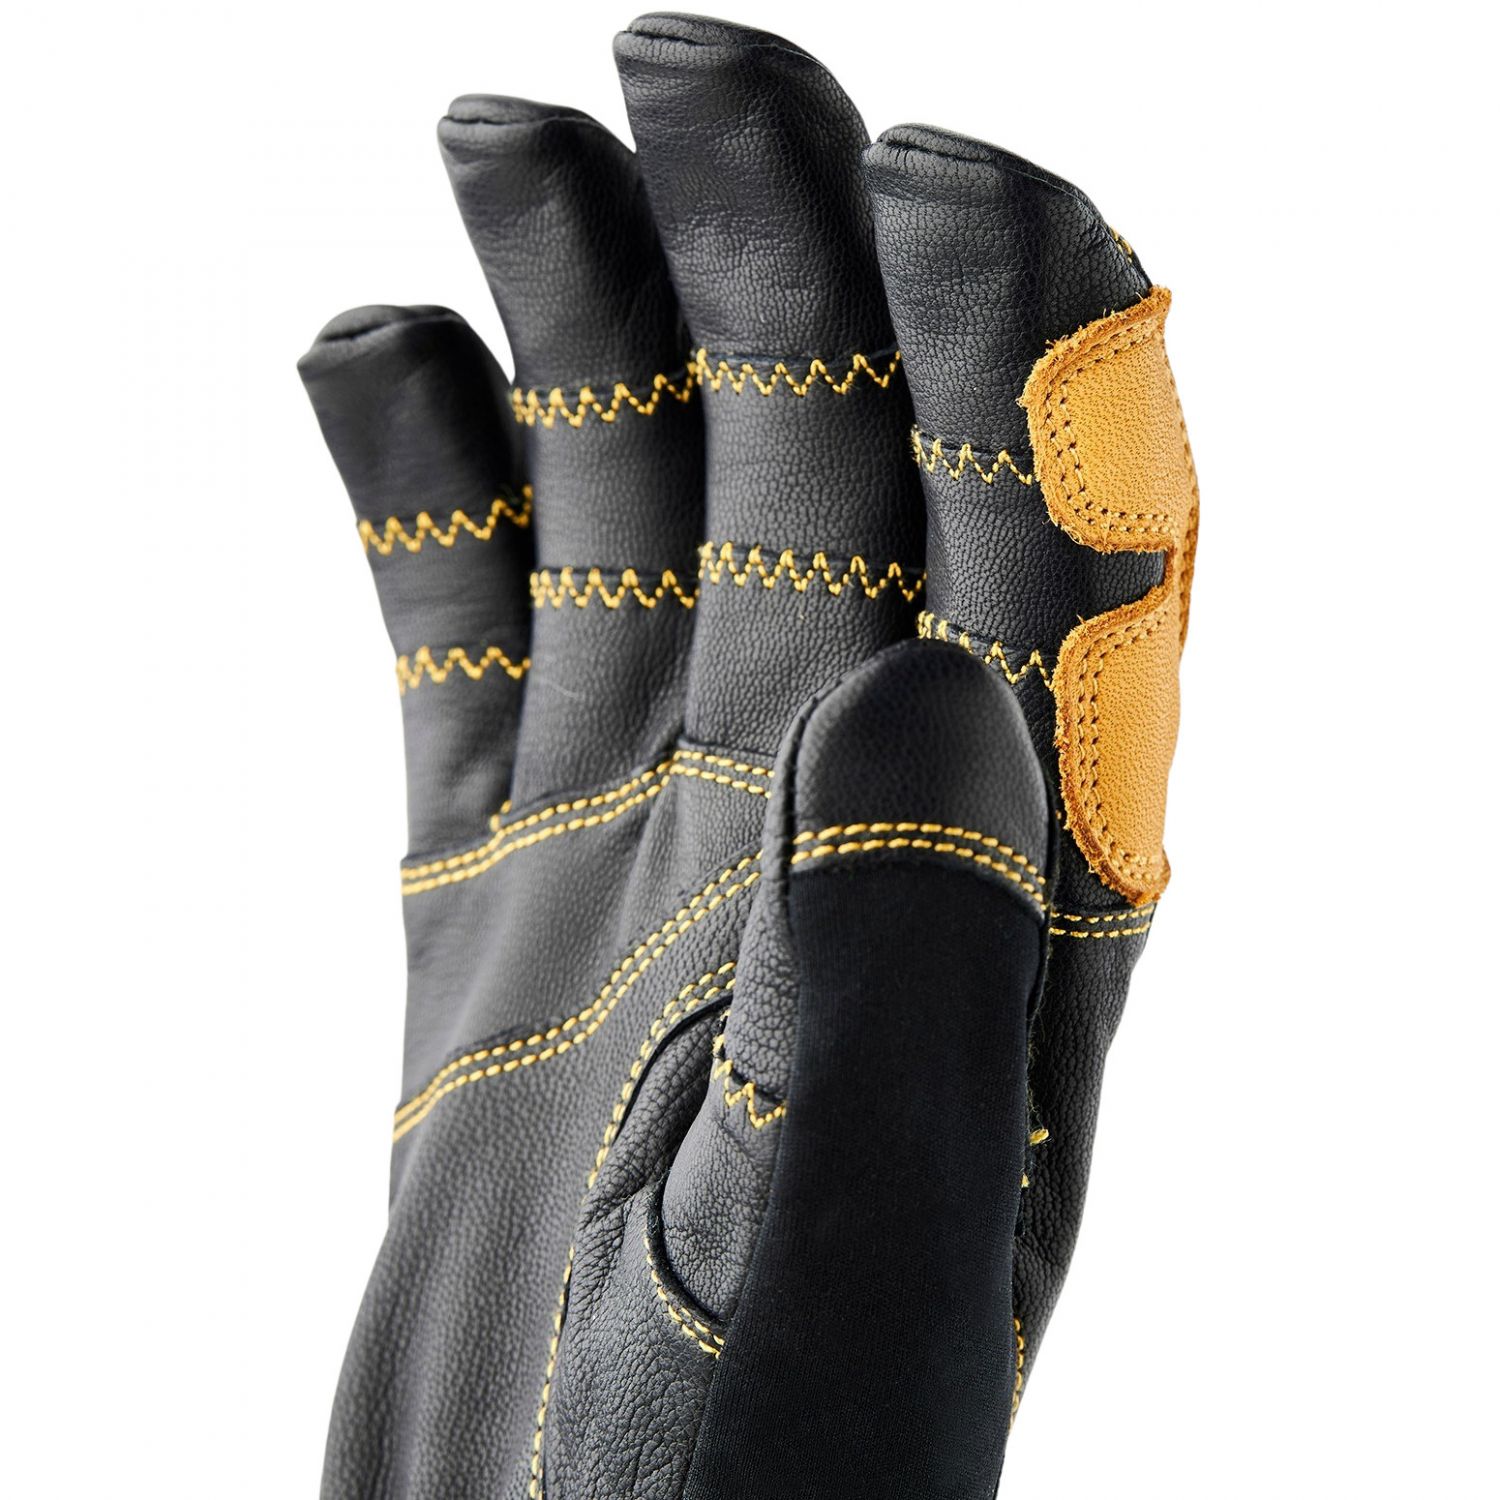 Hestra Ergo Grip Active, gants de ski, noir/noir